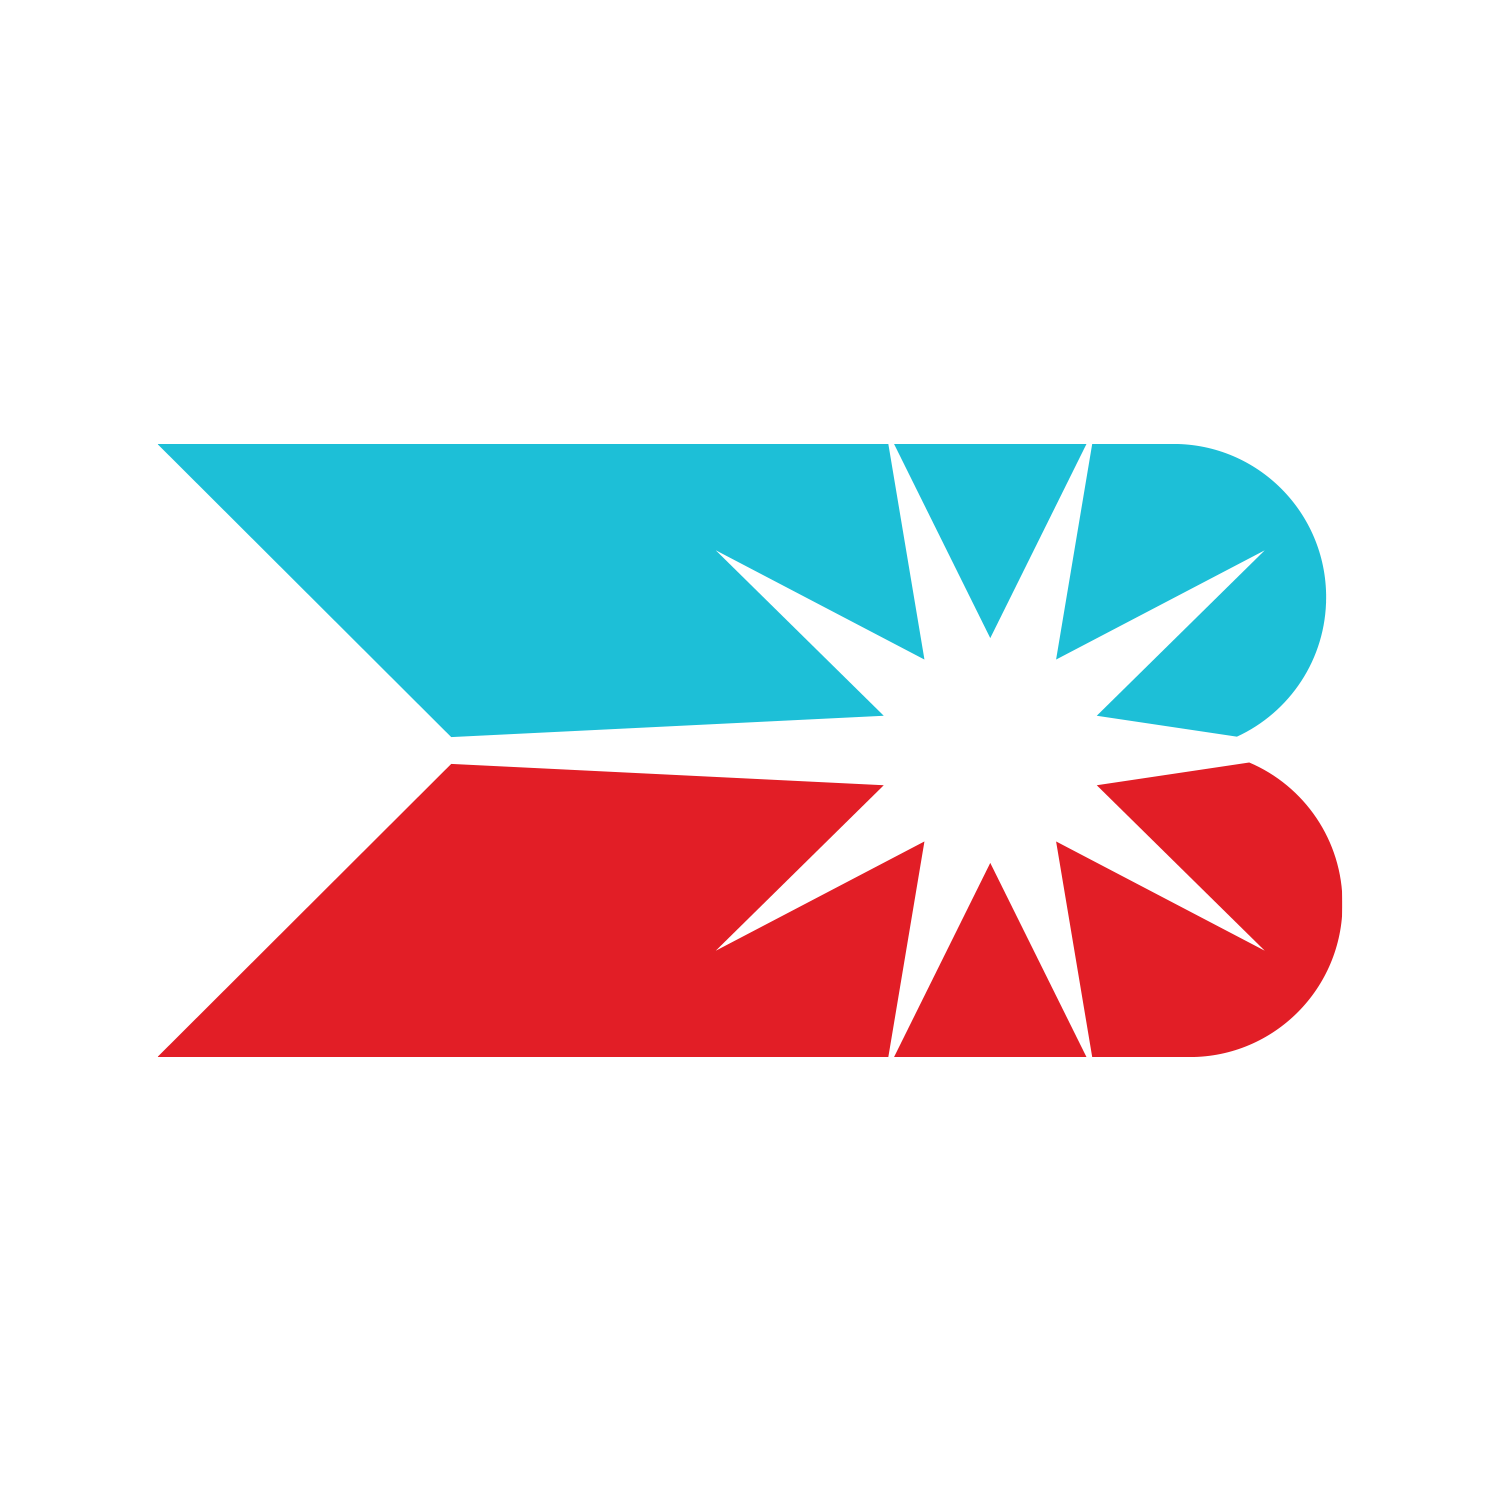 Blaxtone Energy Logo Design - Odessa, TX Oilfield Services Company